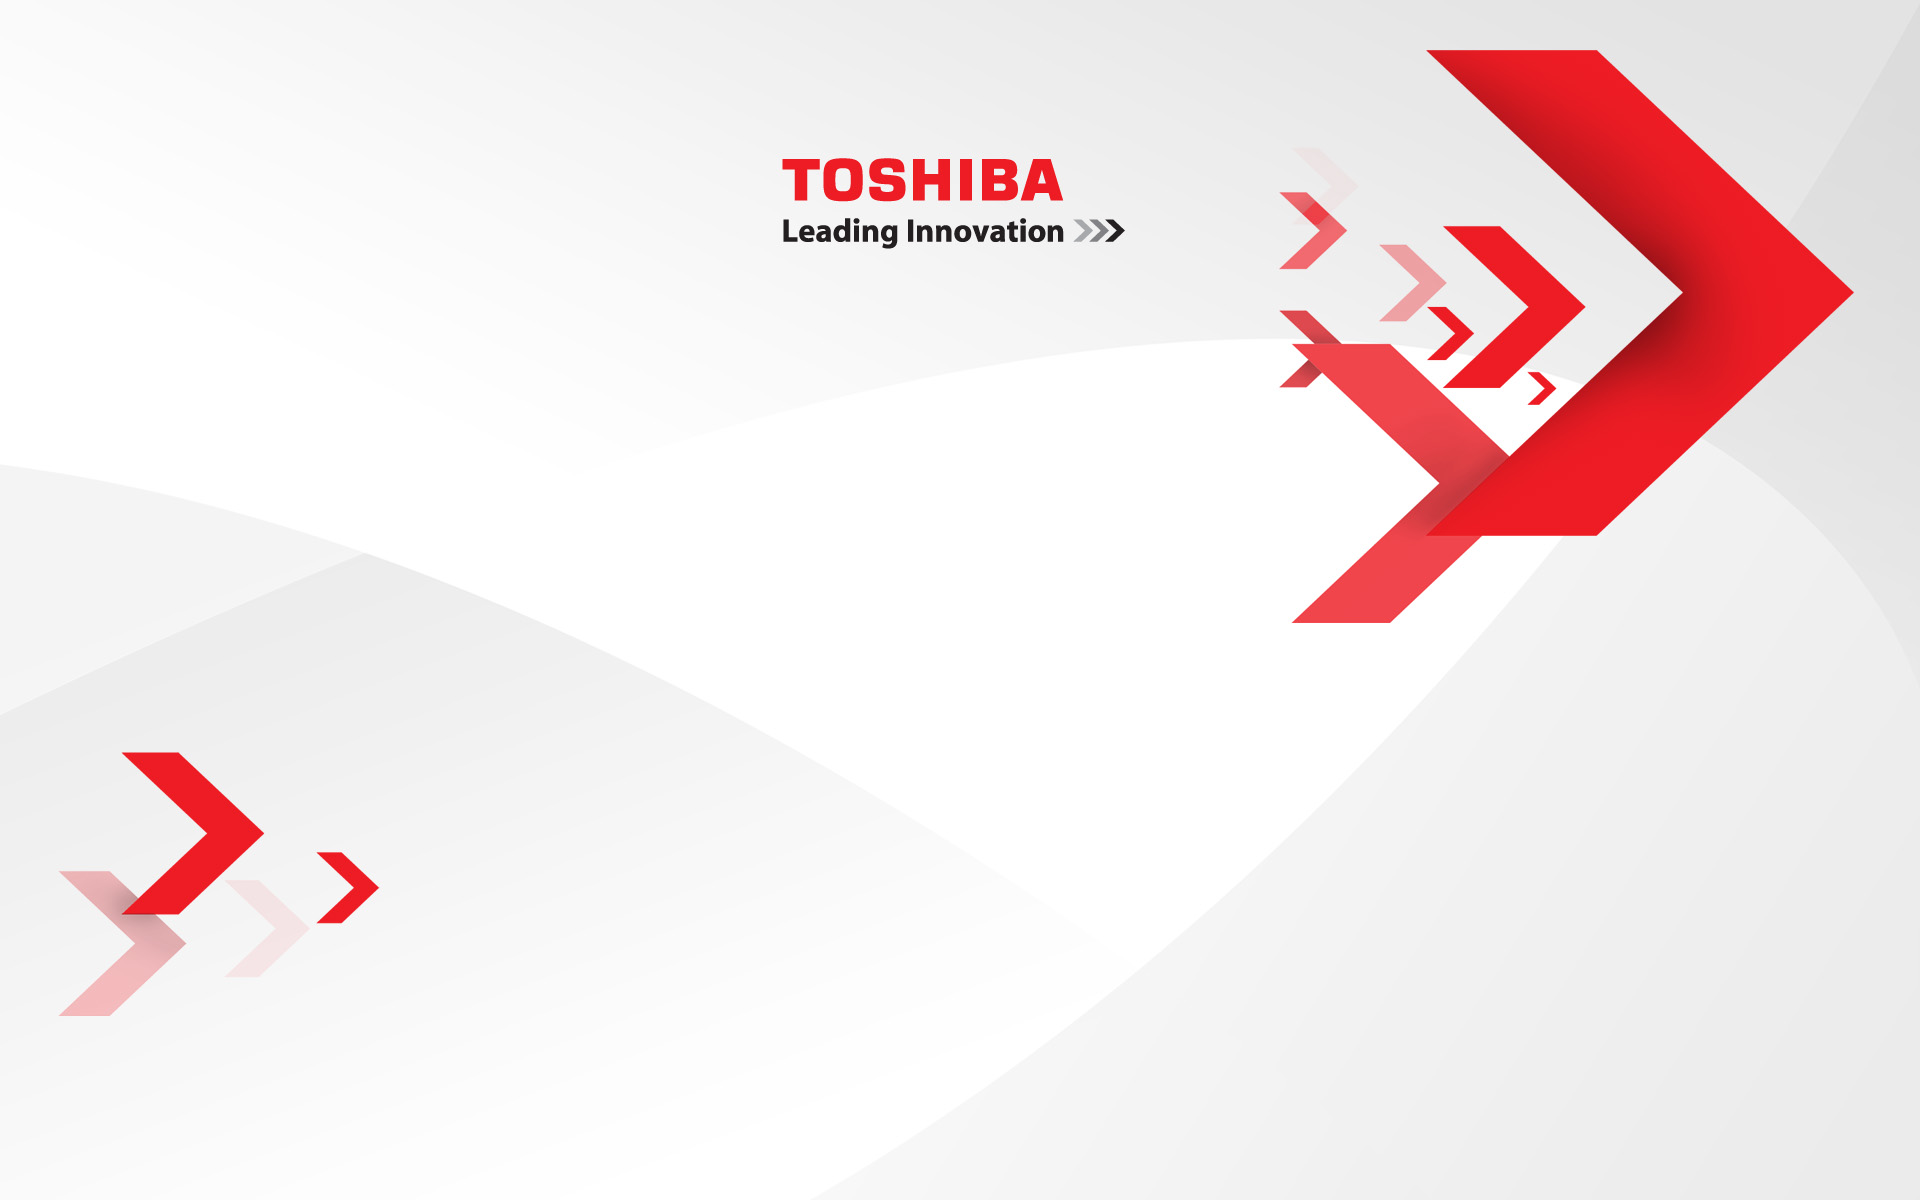 Toshiba Desktop Wallpaper